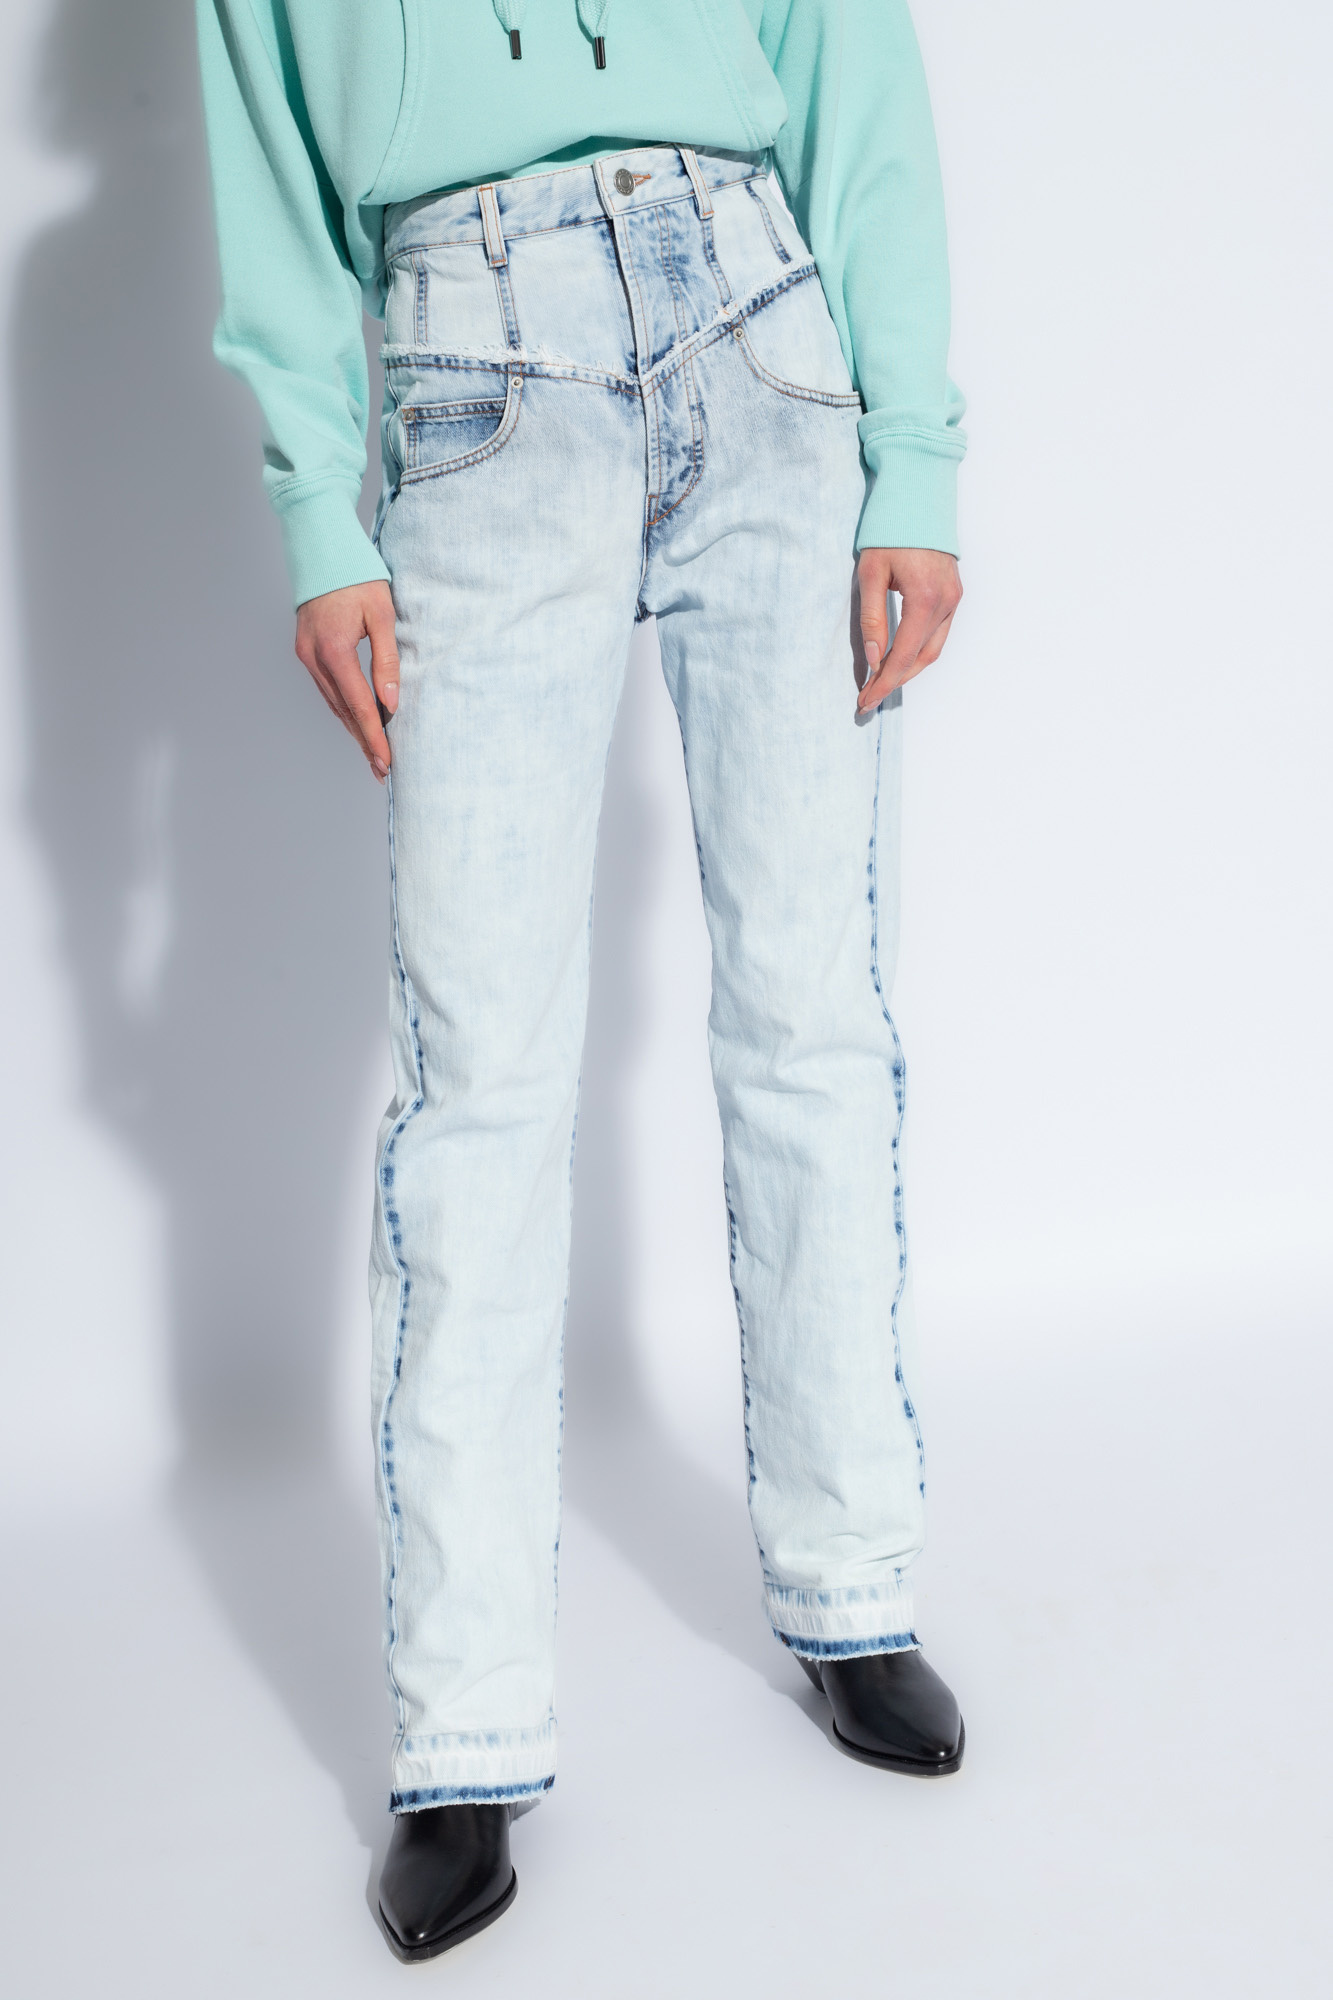 Isabel Marant ‘Noemie’ jeans